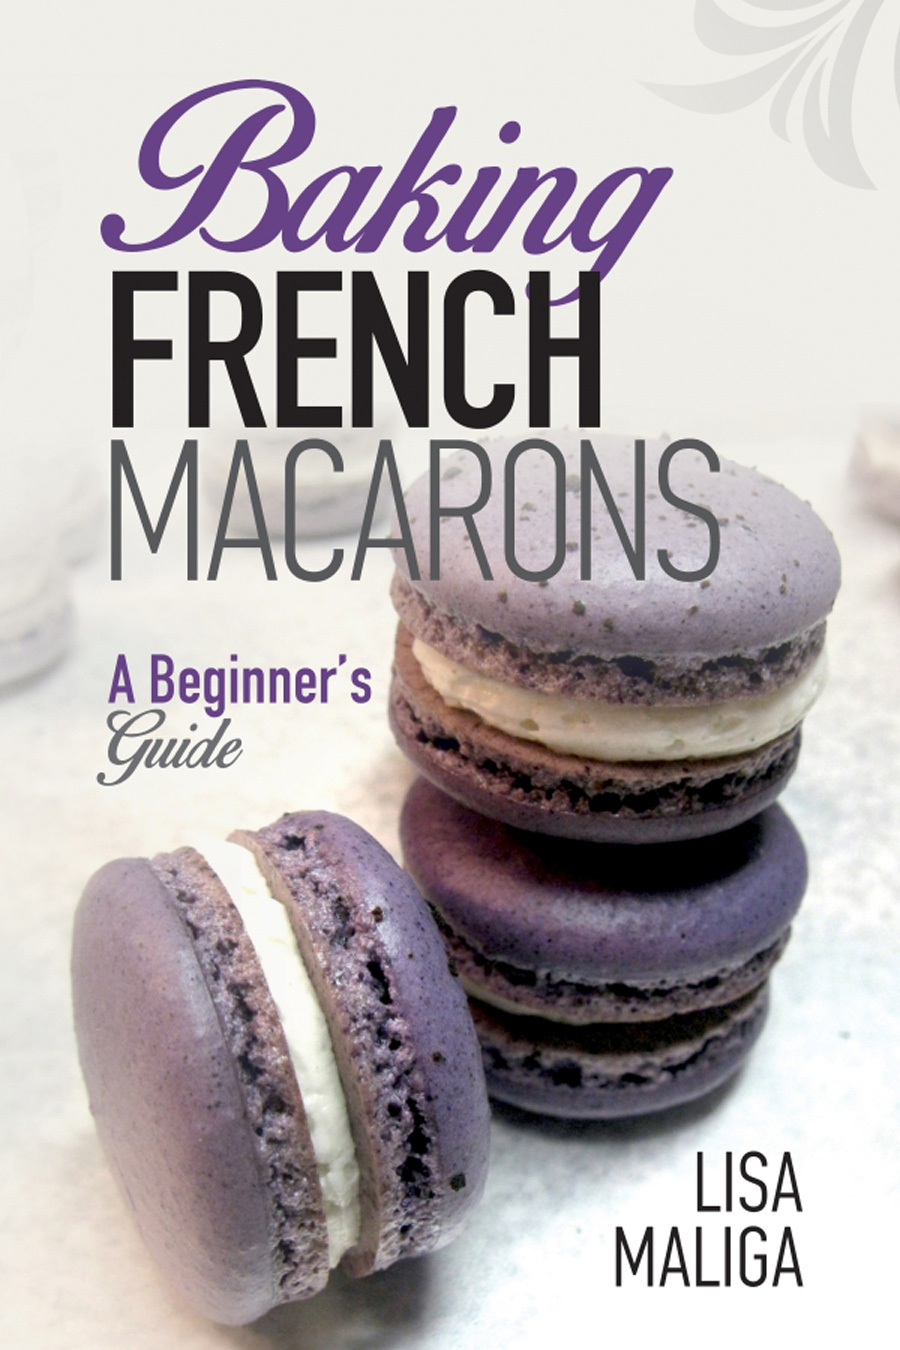 Baking-French-Macarons-by-Lisa-Maliga.jpg